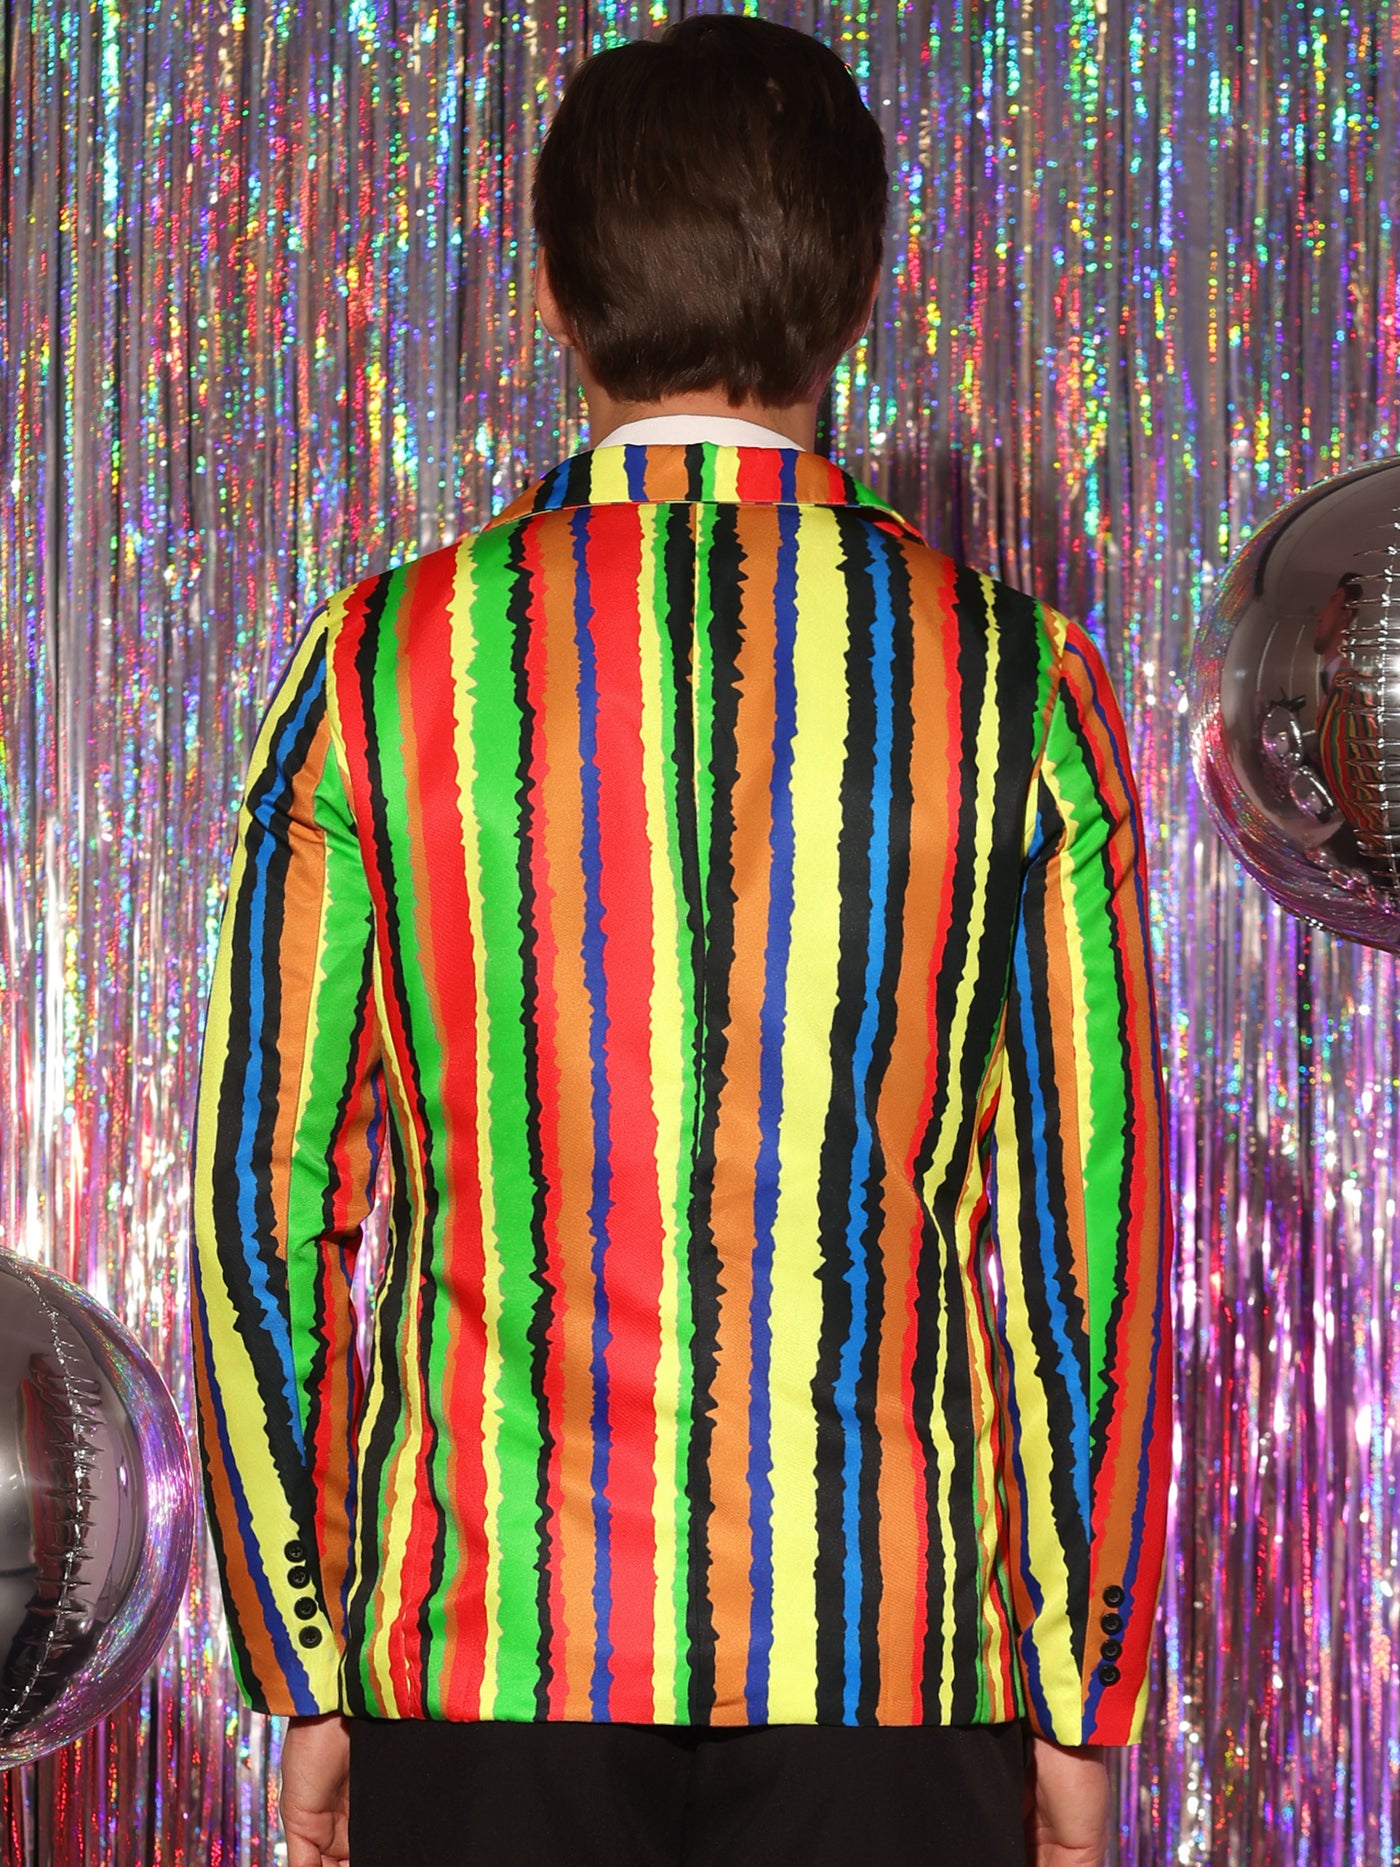 Bublédon Men's Rainbow Striped Notch Lapel Prom Party Blazer Sports Coat Suit Jacket